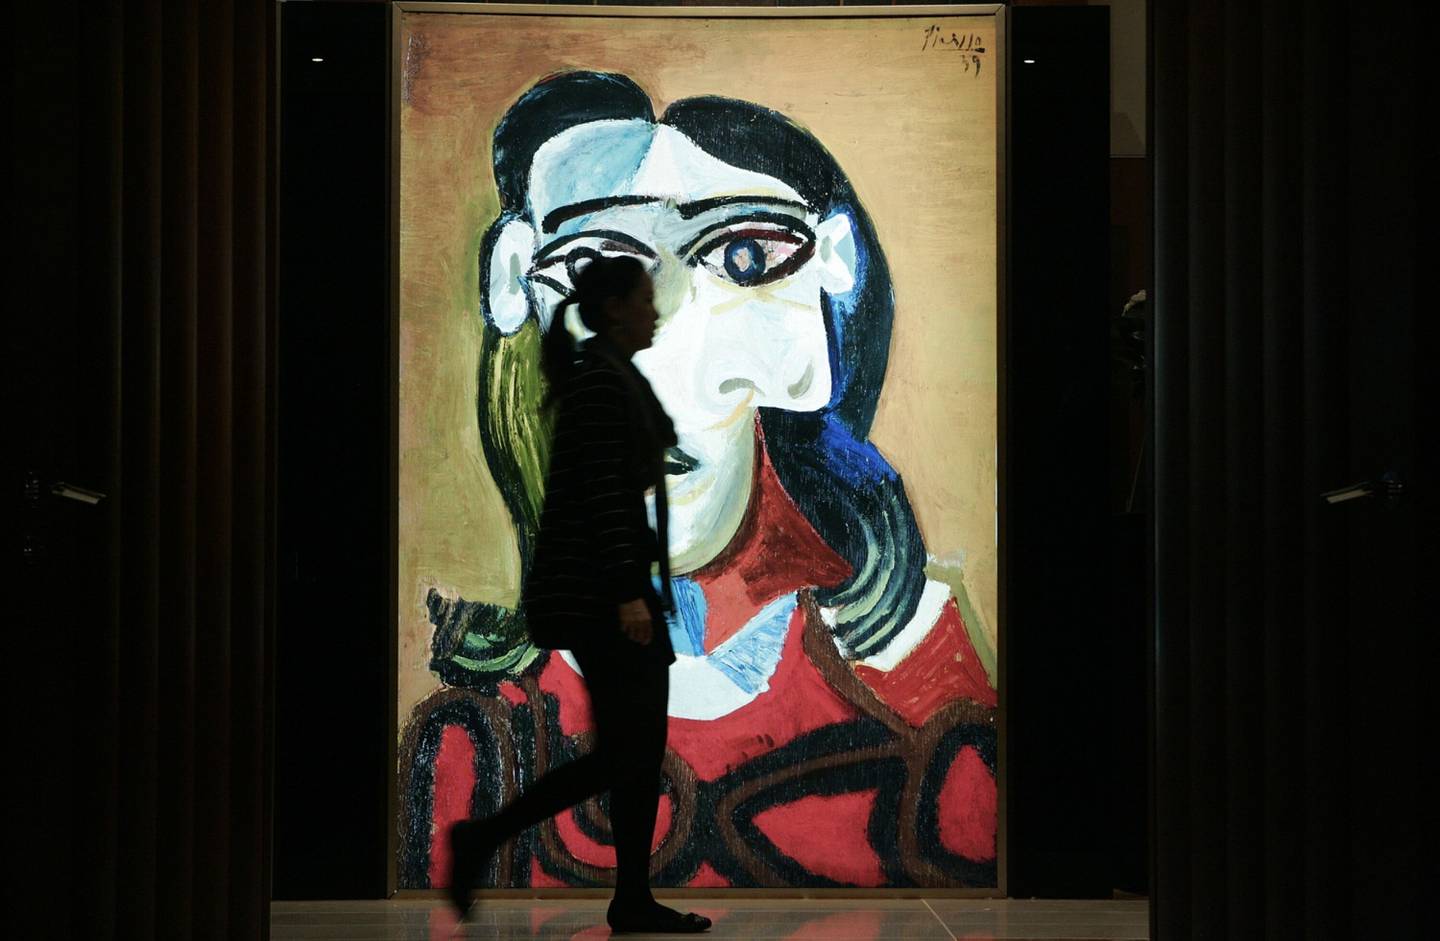 Un visitante pasa junto a un cartel de la obra del artista Pablo Picasso titulada "Jeune fille aux cheveux noirs (Dora Maar)" en una exposición de Sotheby's en Hong Kong, China.dfd